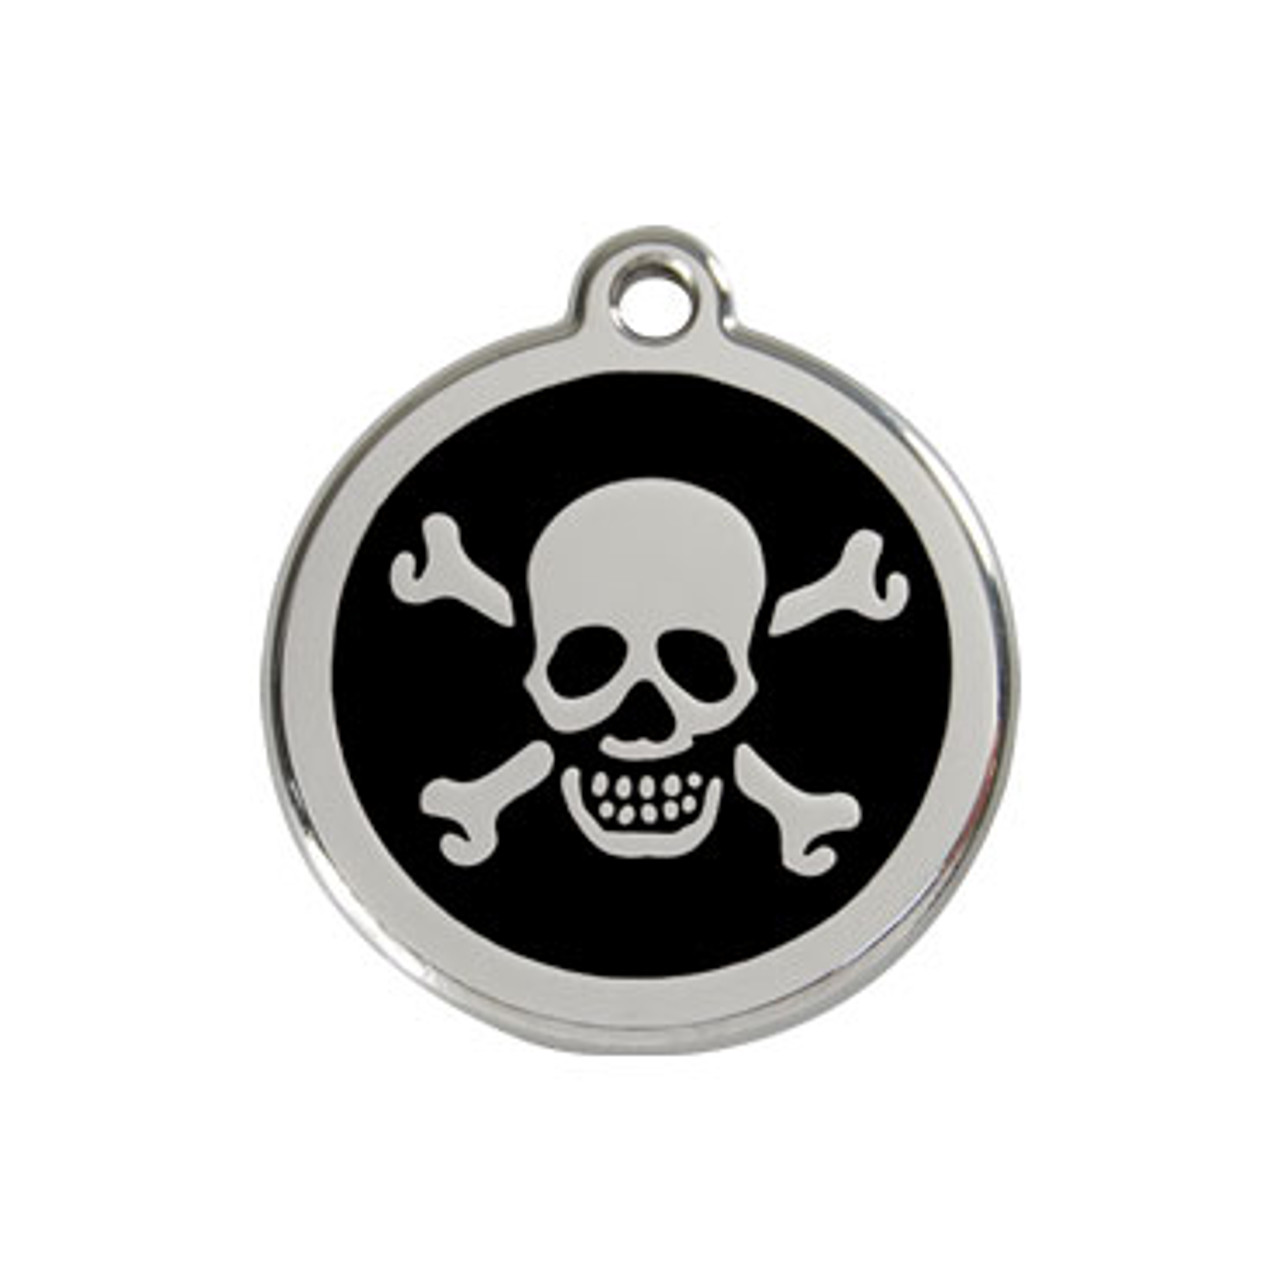 Skull & Crossbones Stainless Steel Enamel ID Tag